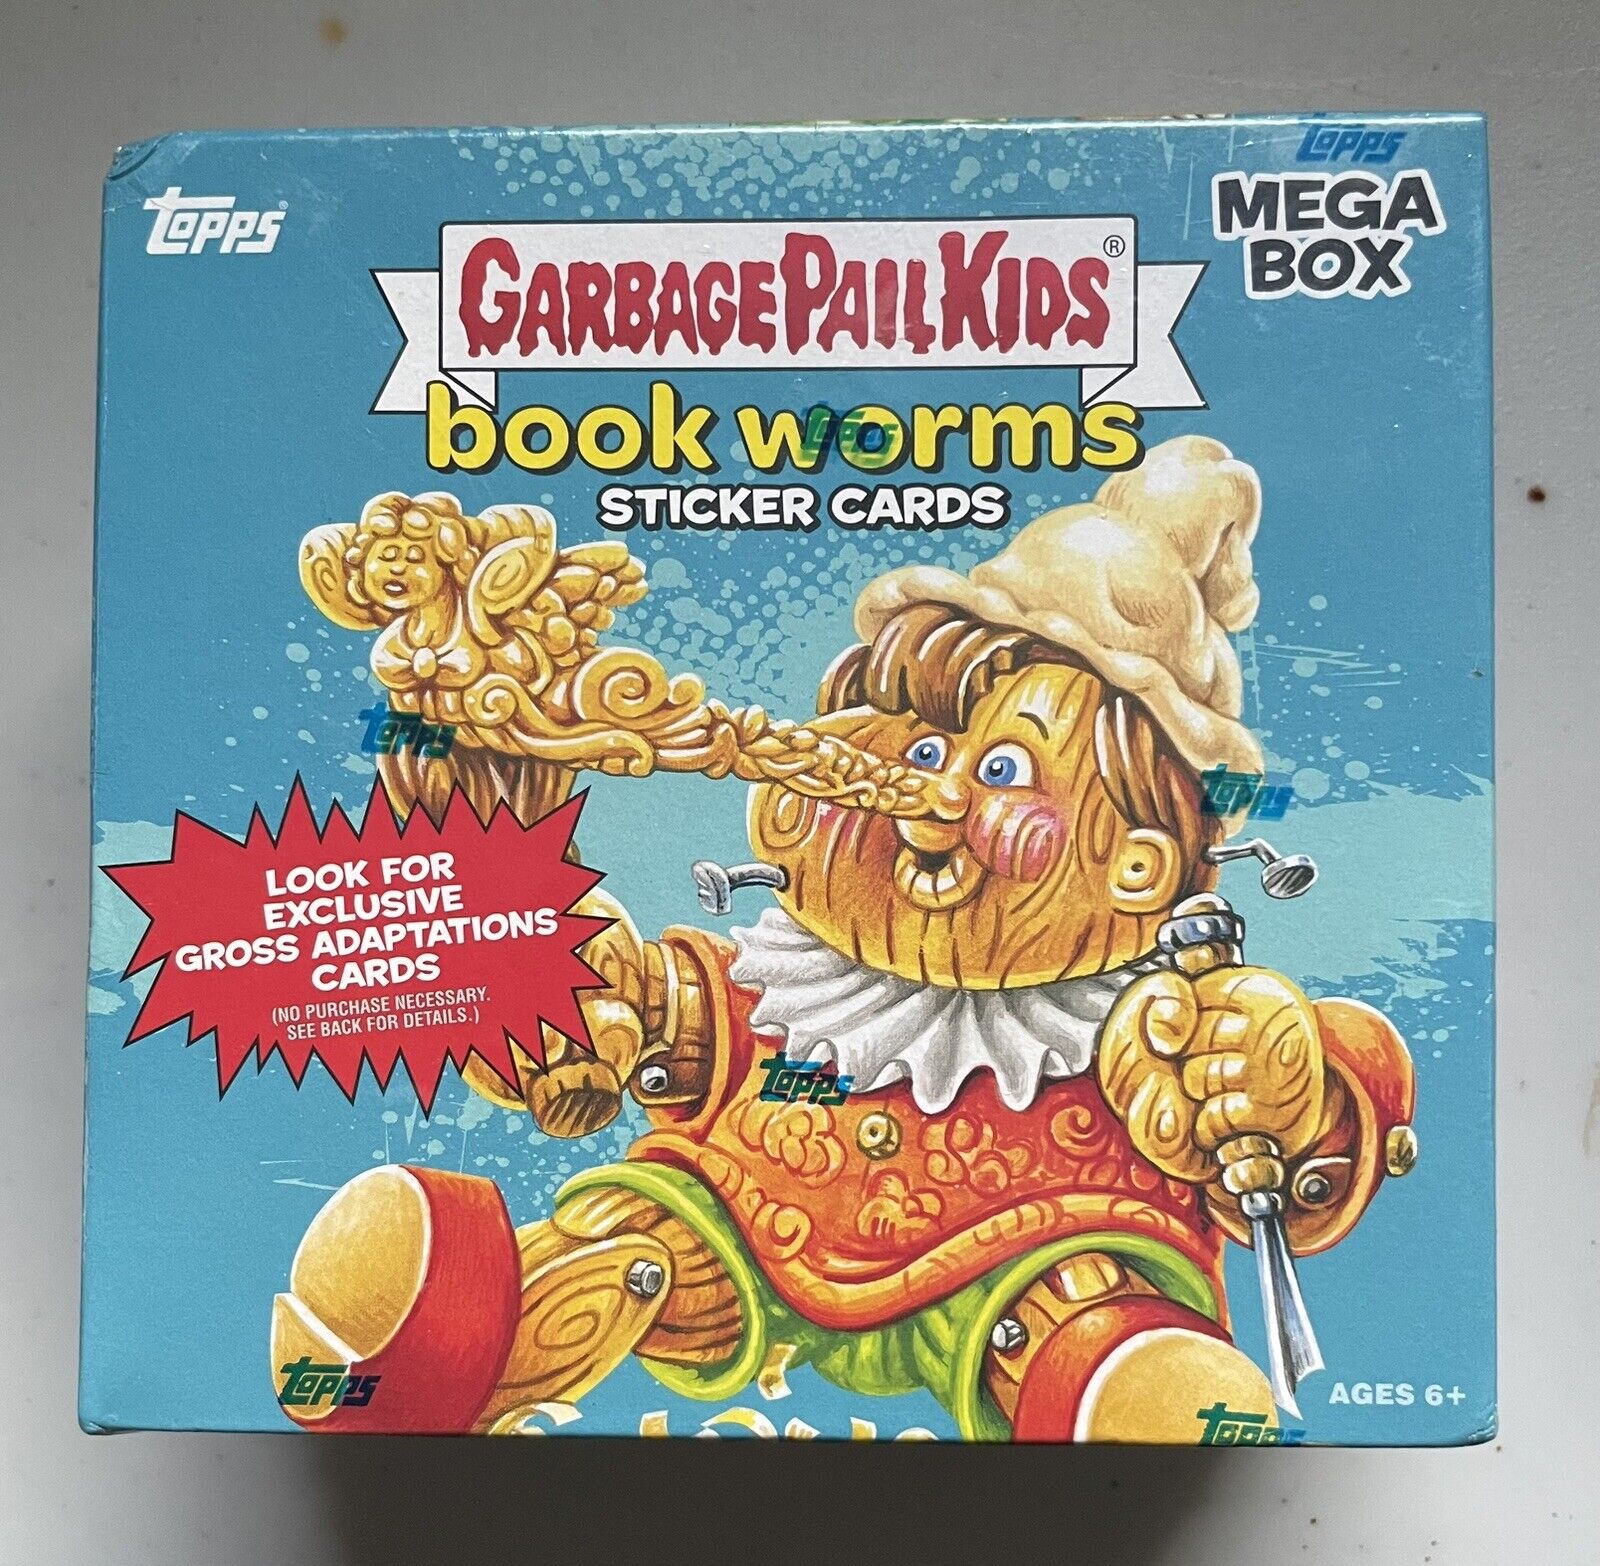 GPK Book Worms Sticker Cards - Factory Sealed - Topps MEGA Box Garbage Pail Kids